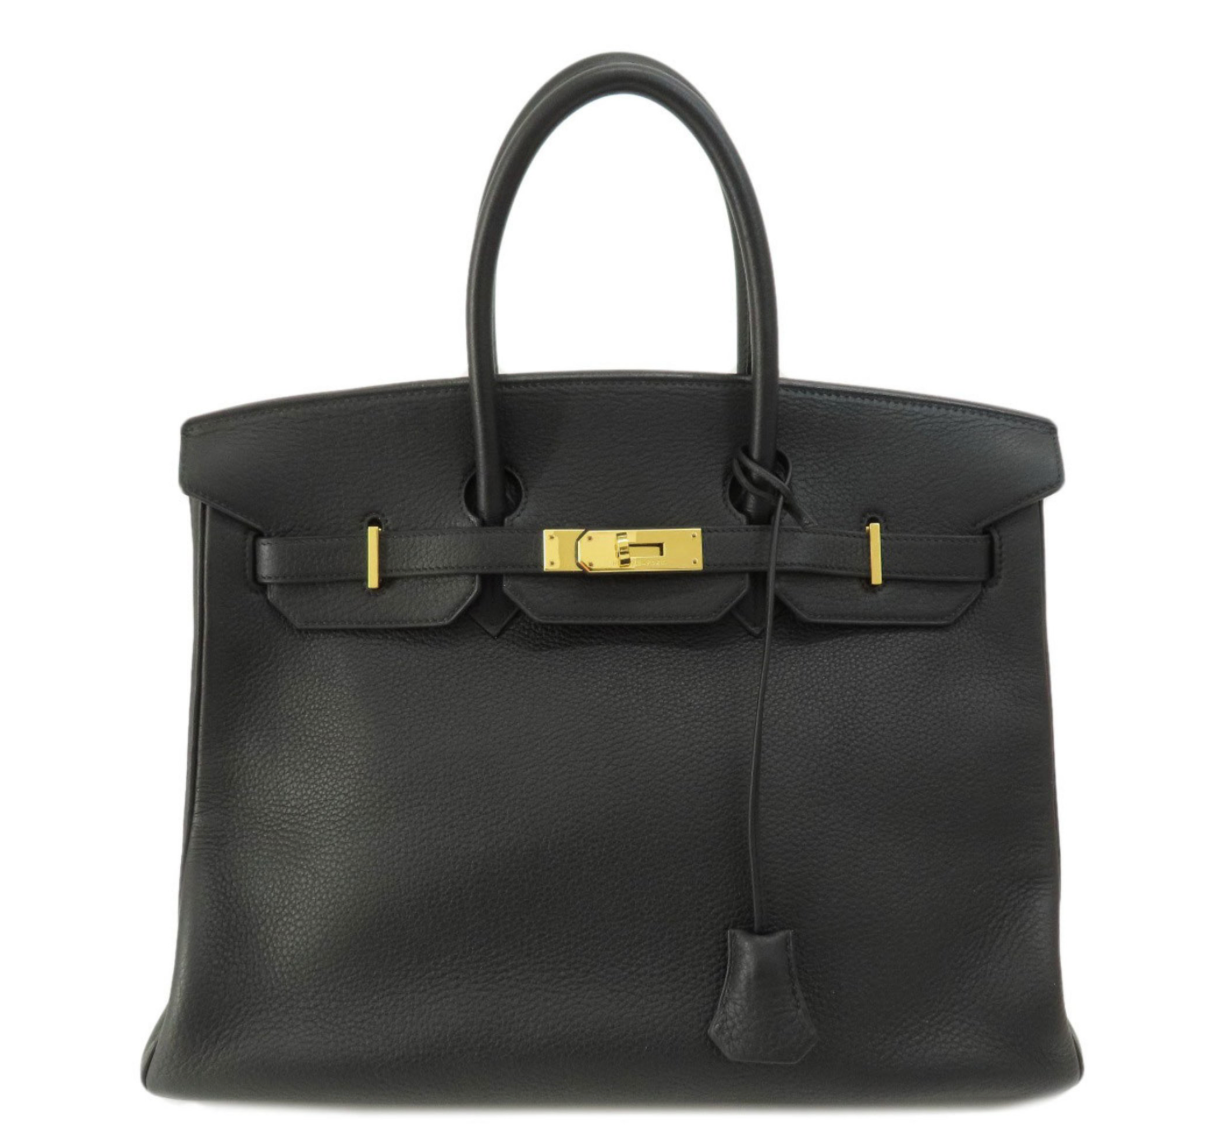 Pre-owned HERMES Birkin 35 handbag in black color and gold plated hardware